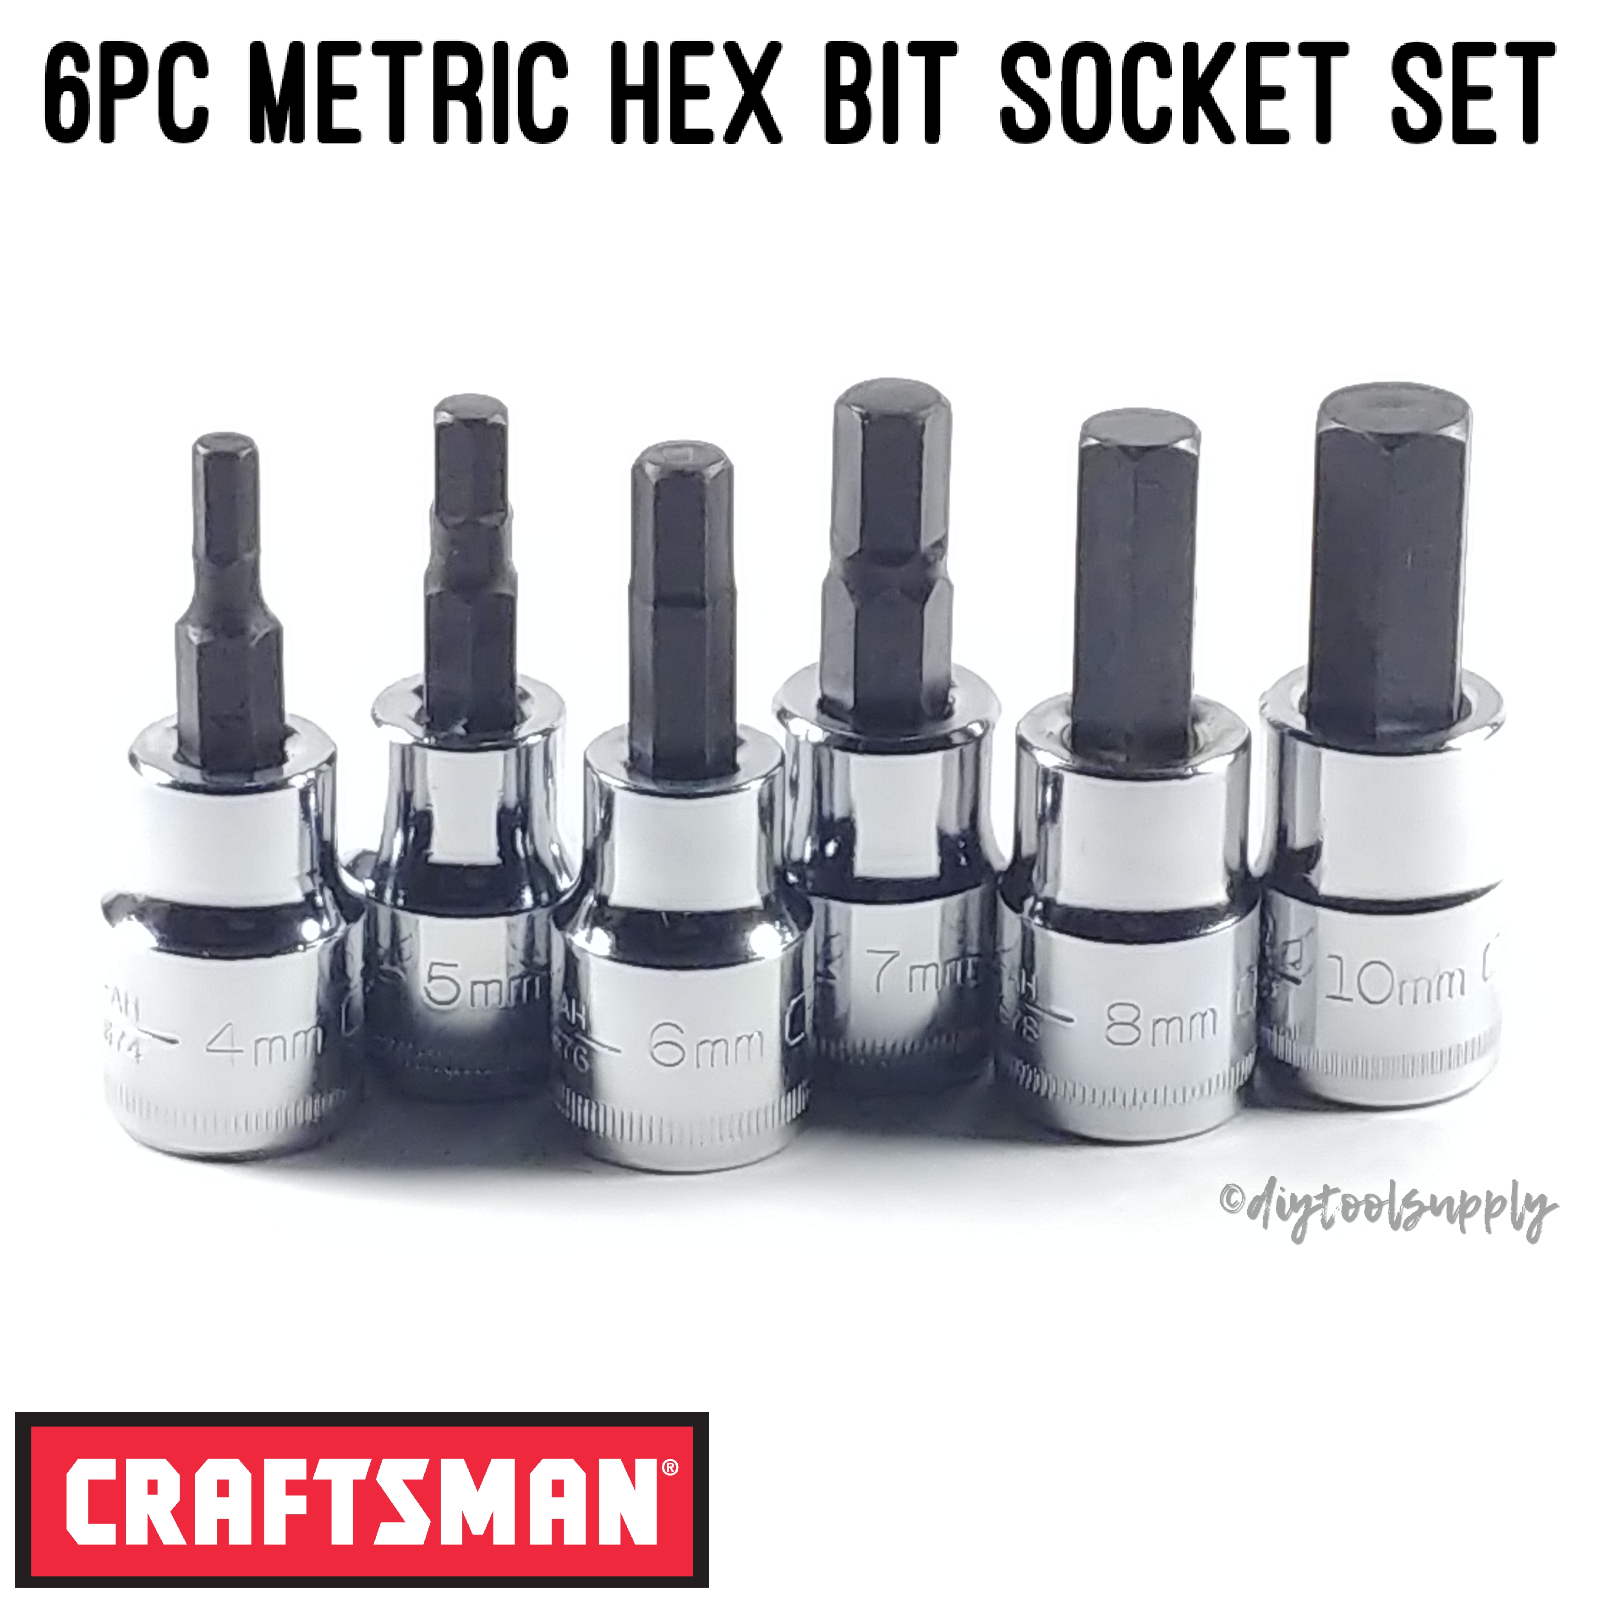 Craftsman Metric MM Hex Bit Allen Key Socket Set for 3/8" Drive Ratchet 6pc Craftsman